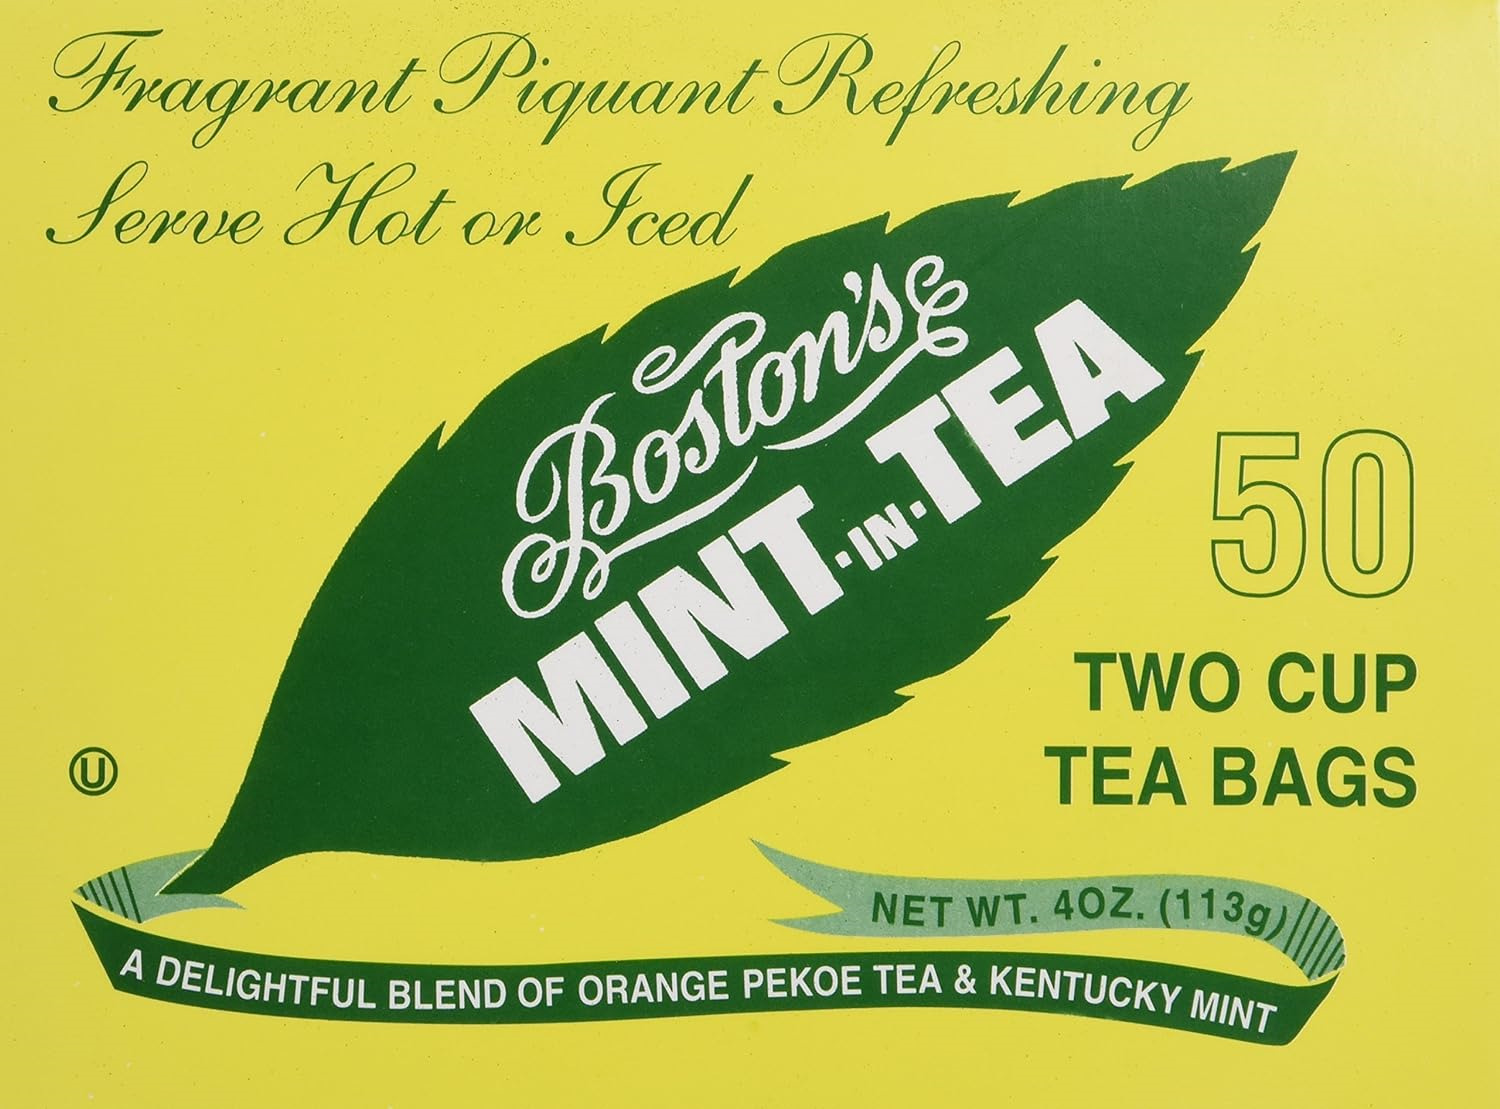 Boston's Mint-In-Tea Two Cup Tea Bags - 50 CT